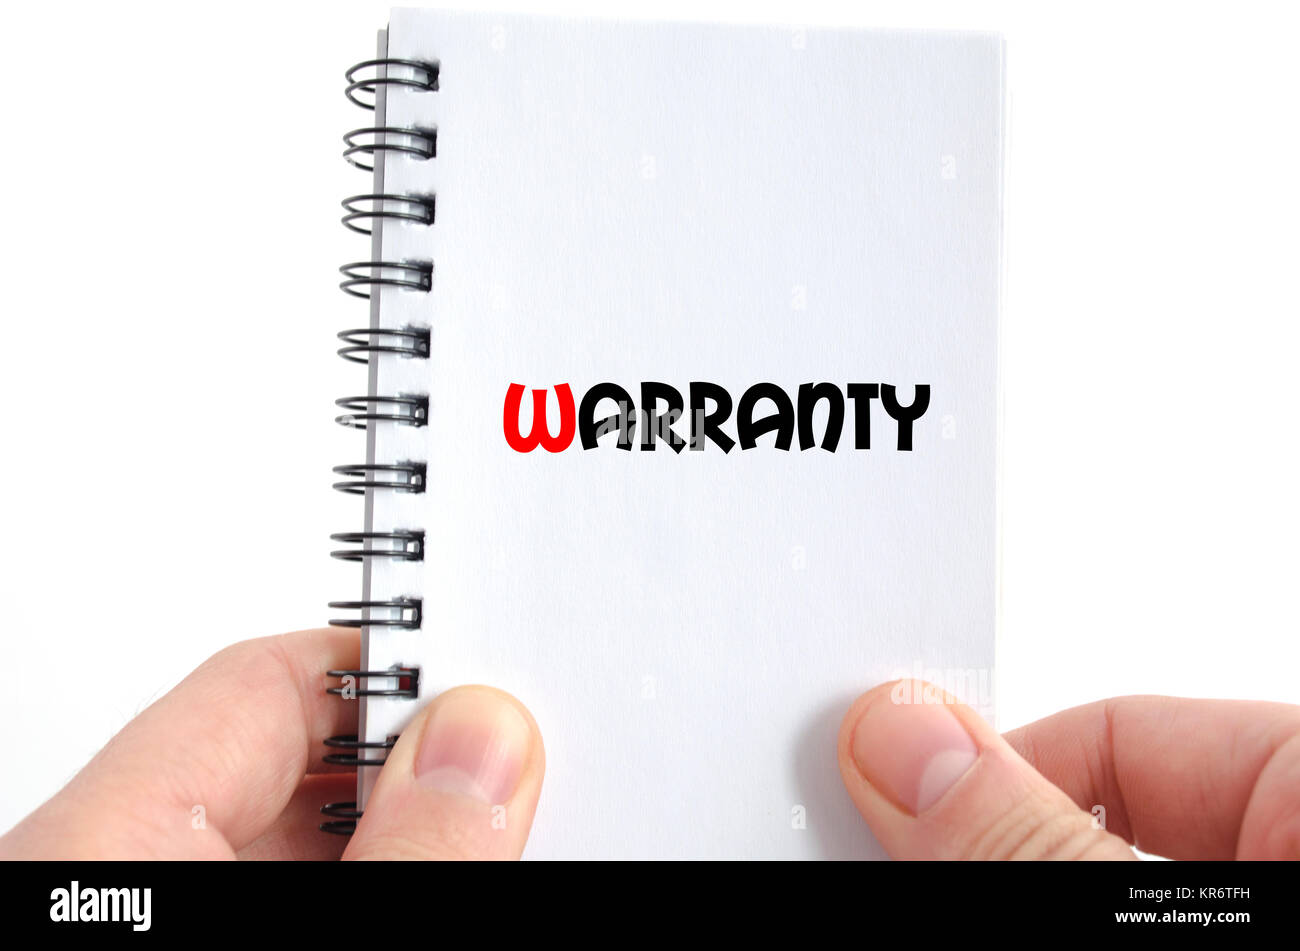 Warranty text concept Stock Photo